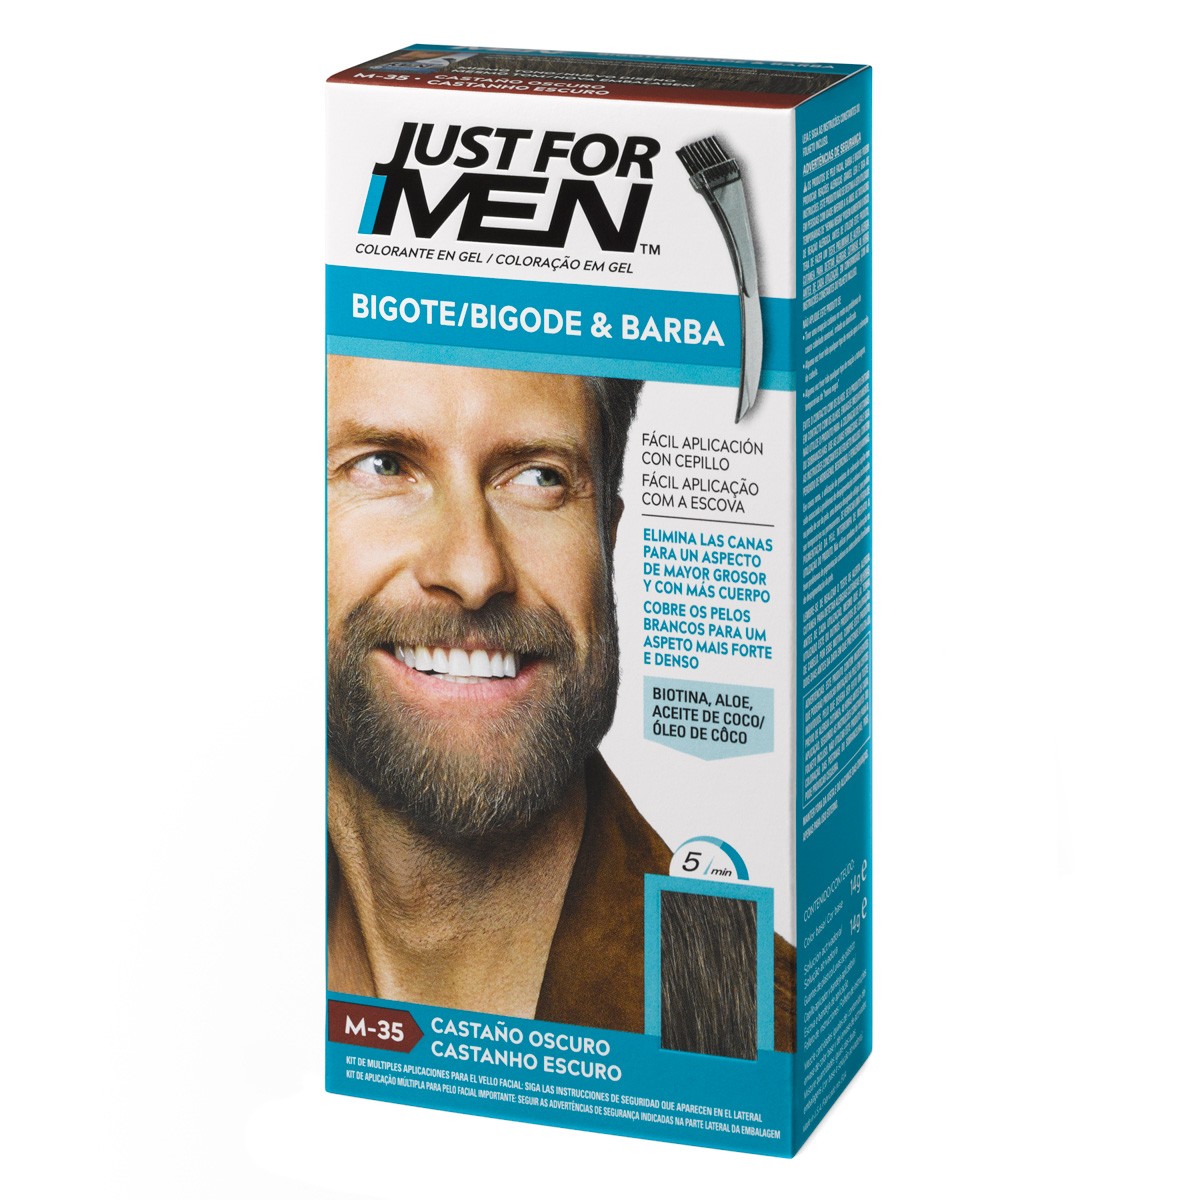 Imagen de Just for men barba bigote cast oscuro